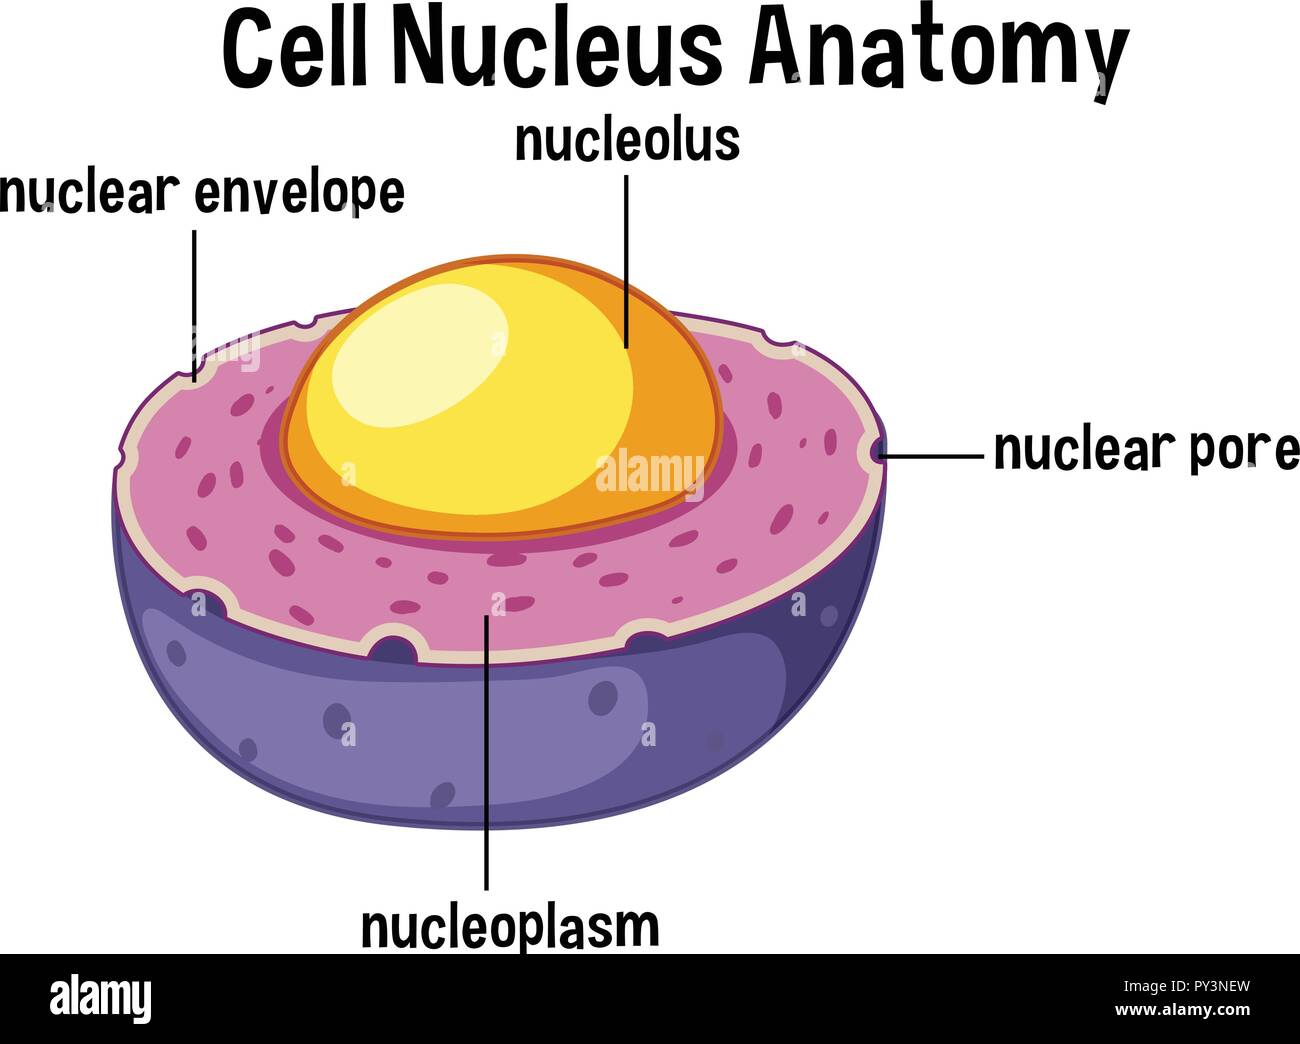 Animal cell nucleus anatomy illustration Stock Vector